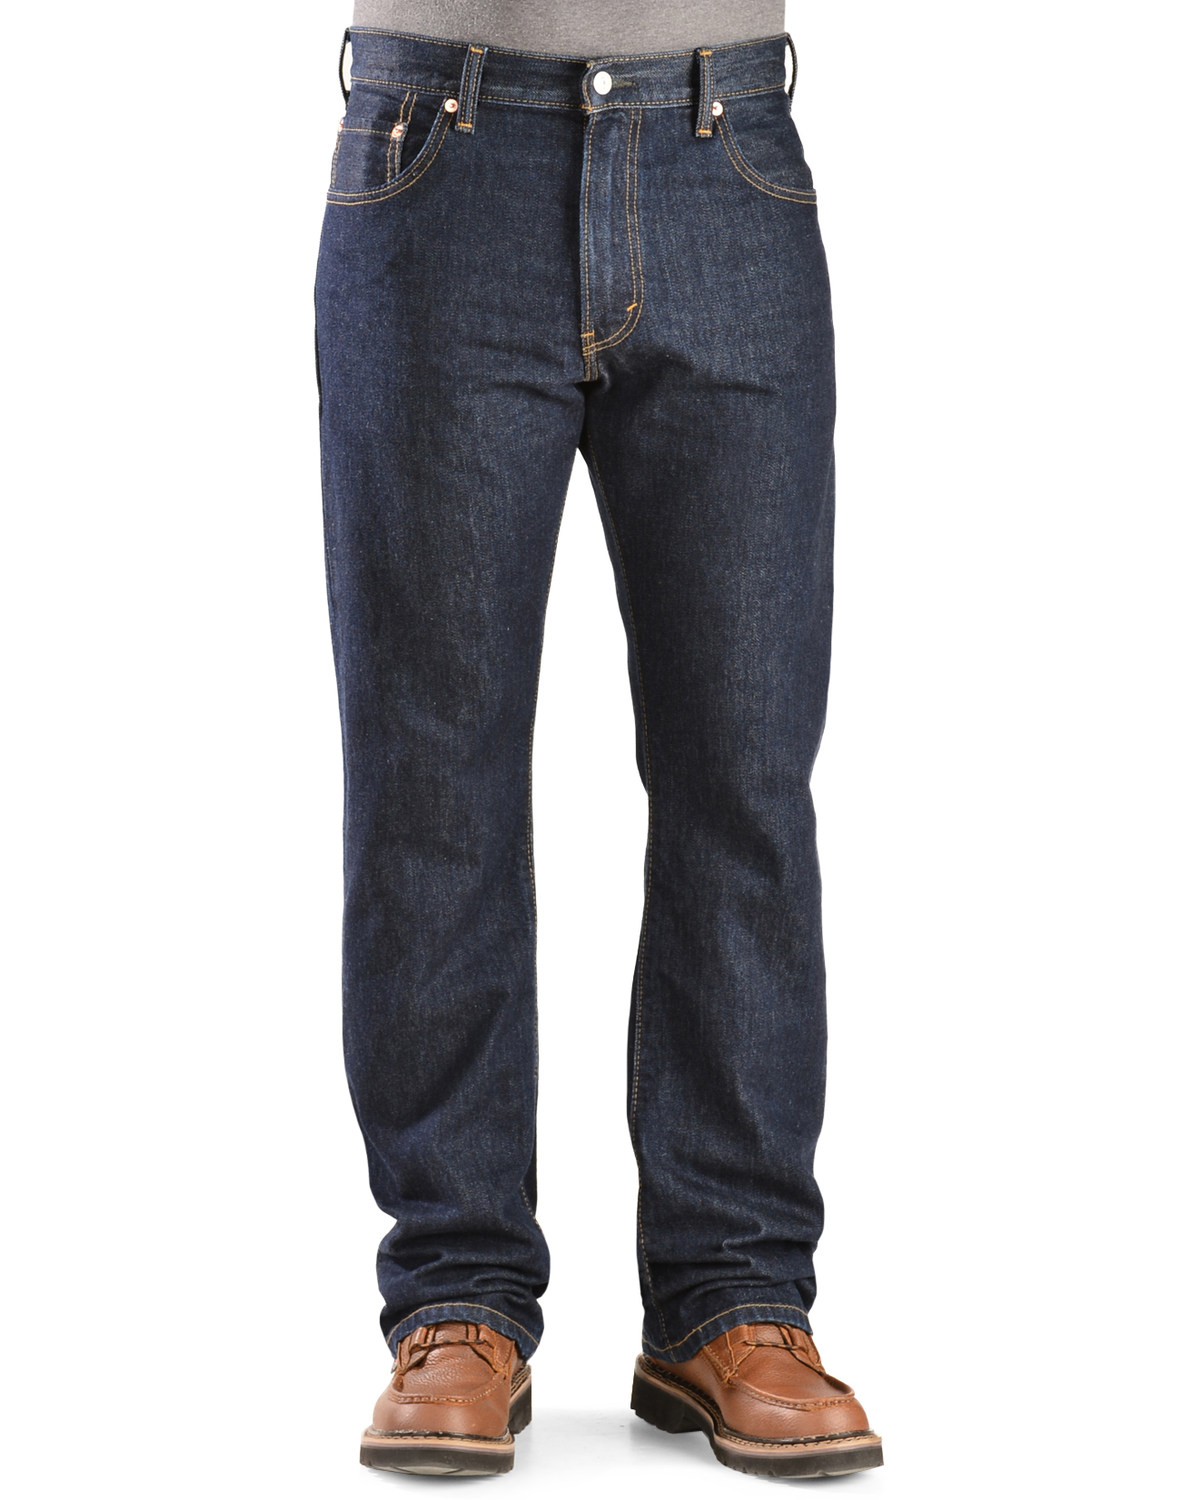 Levi's 517 Jeans - Slim Fit Boot Cut | Boot Barn